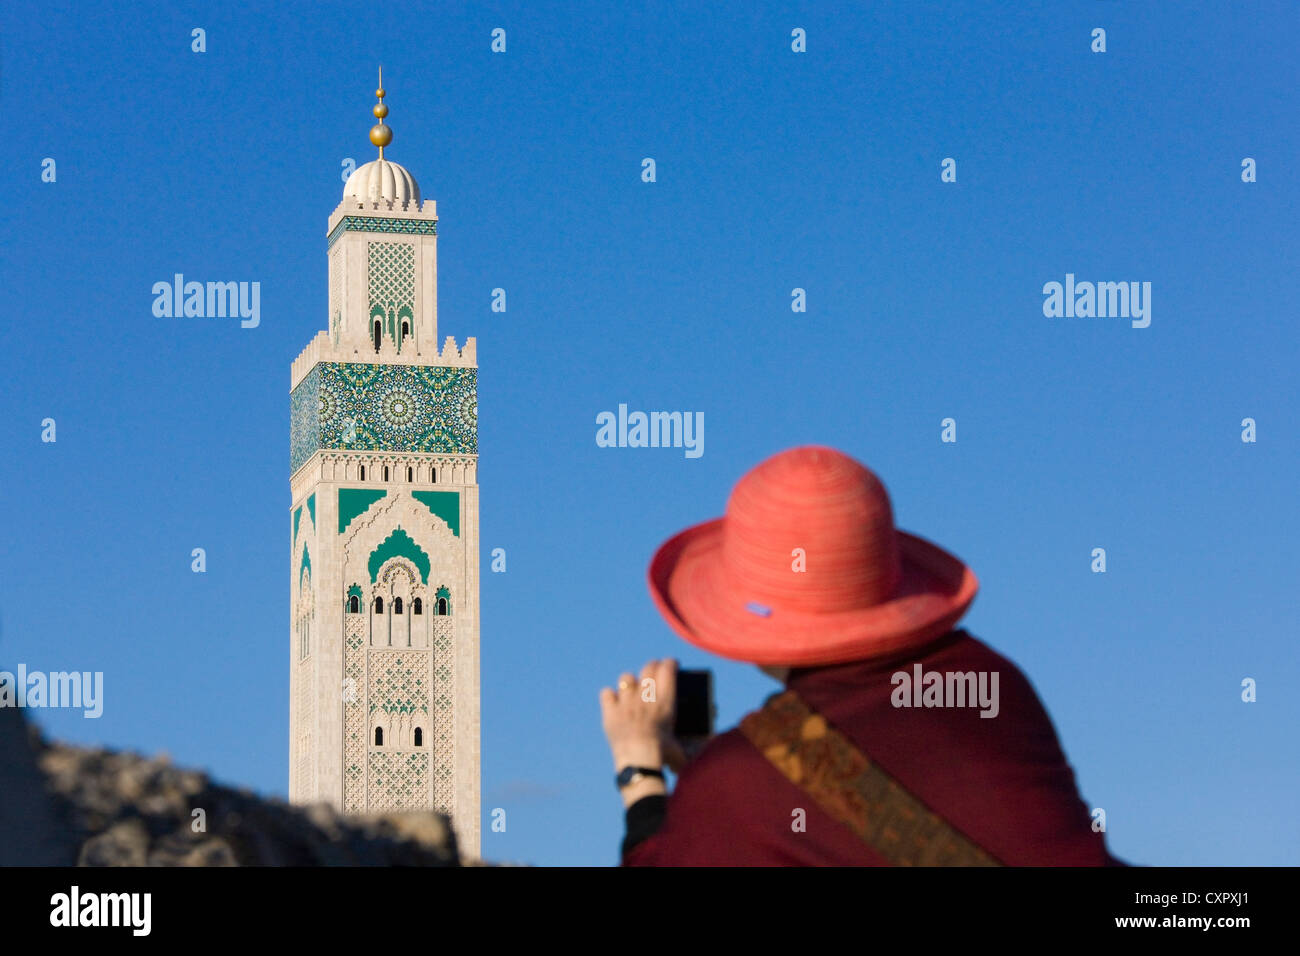 Turista fotografiando Mezquita de Hassan II, Casablanca, Marruecos Foto de stock